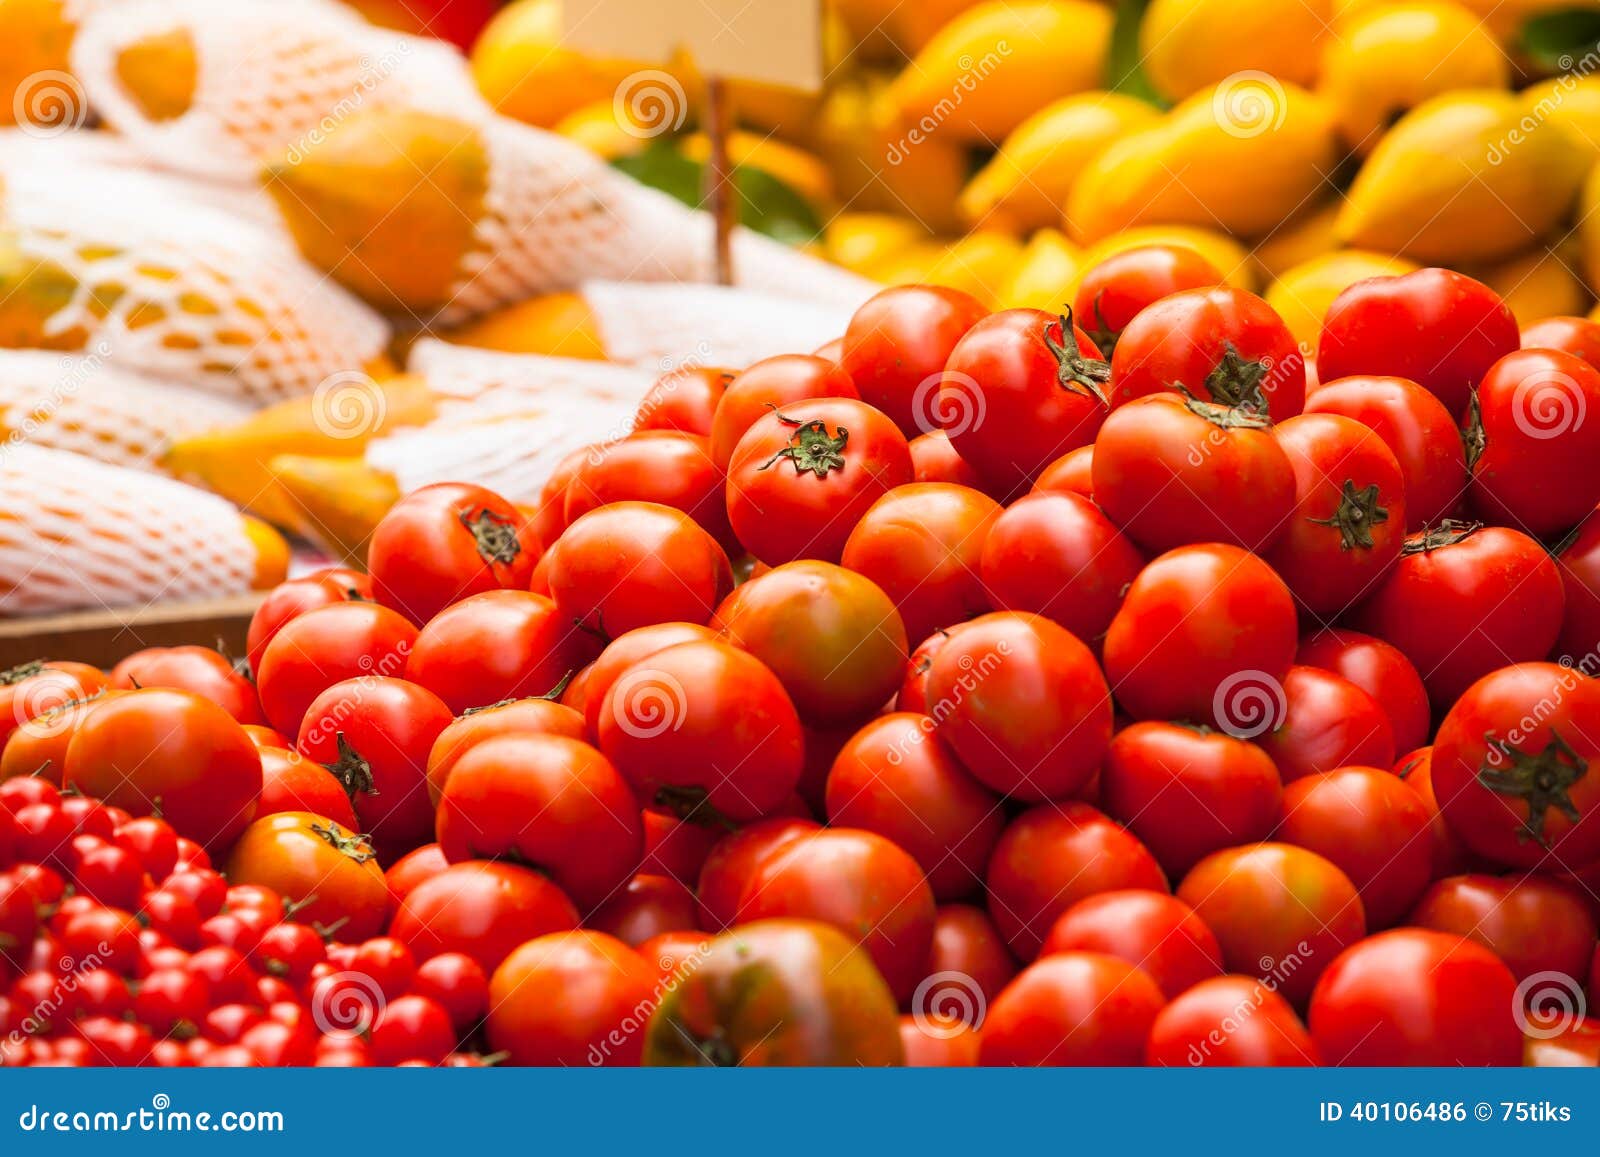 Tomato Market Sale stock photo. Image of garden, groceries - 40106486